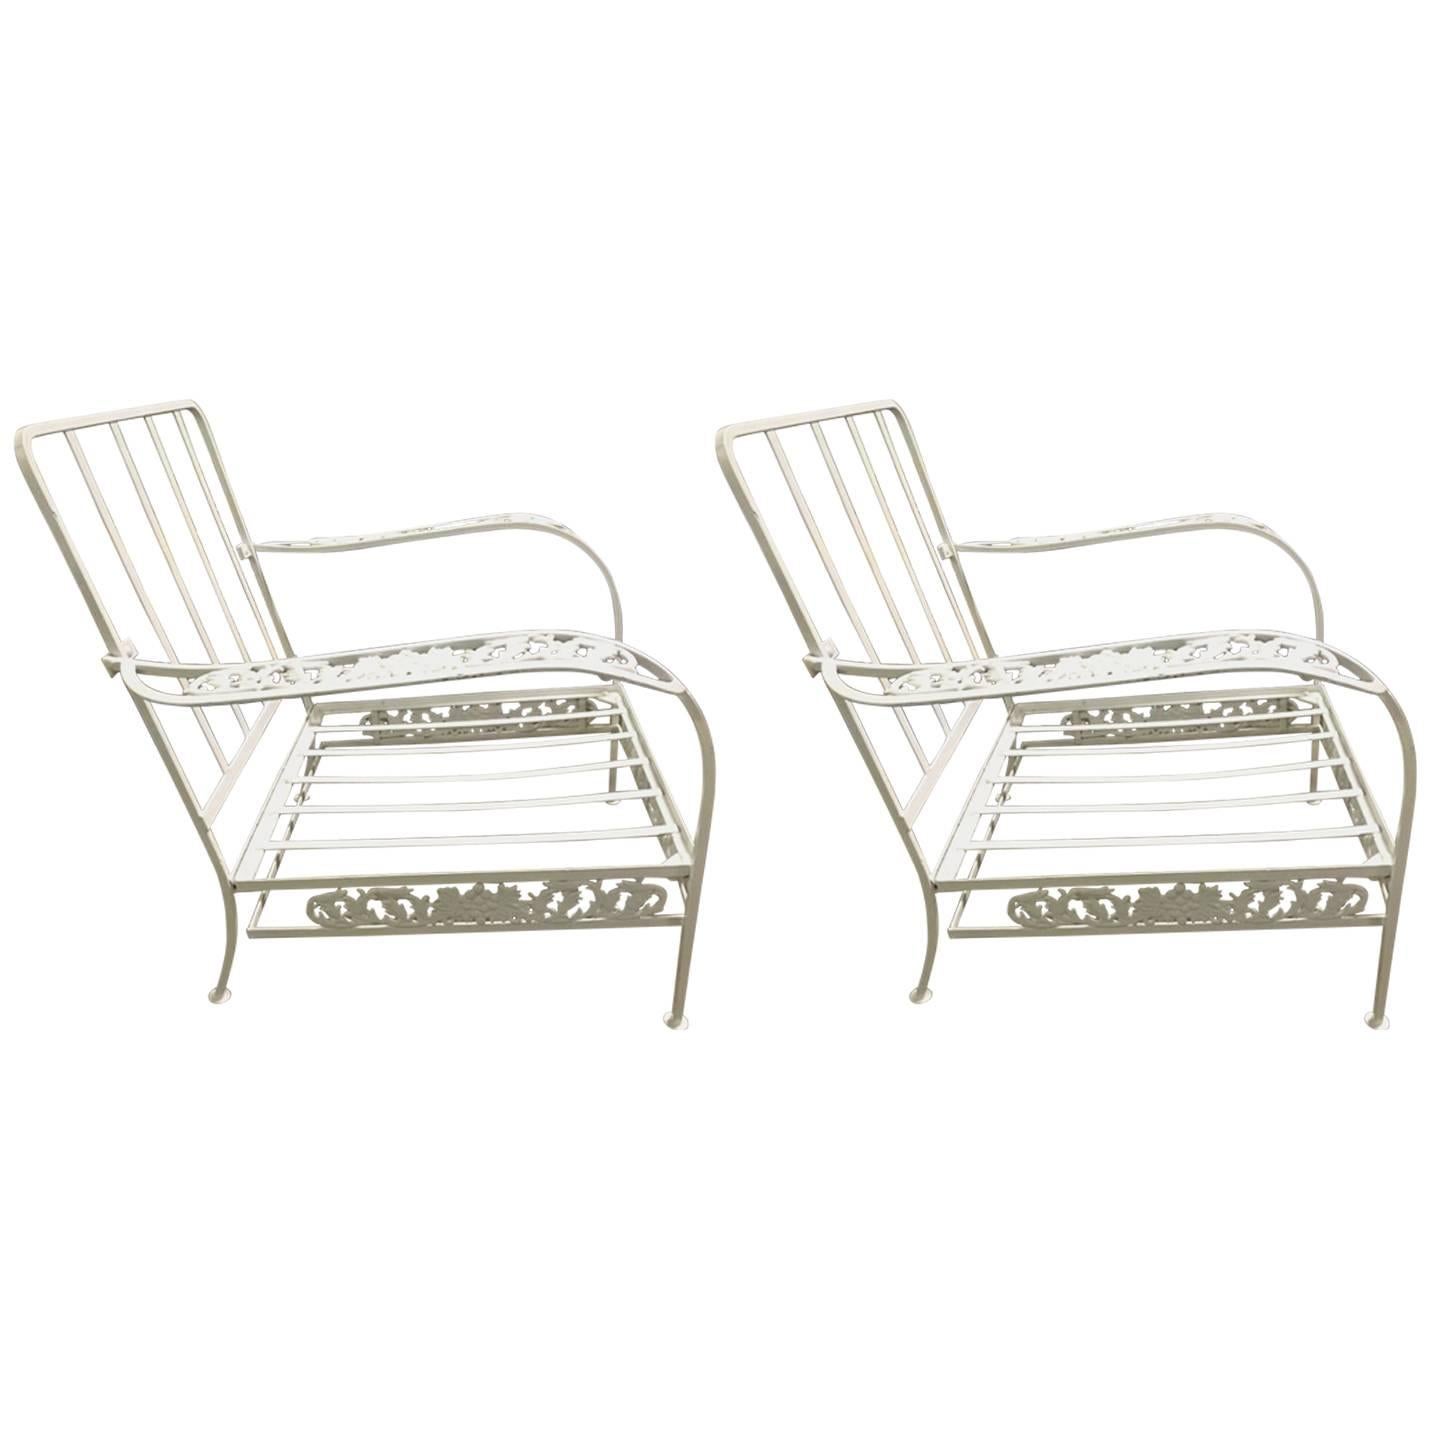 Pair of Salterini "Grape Vine" Lounge Chair Frames in White